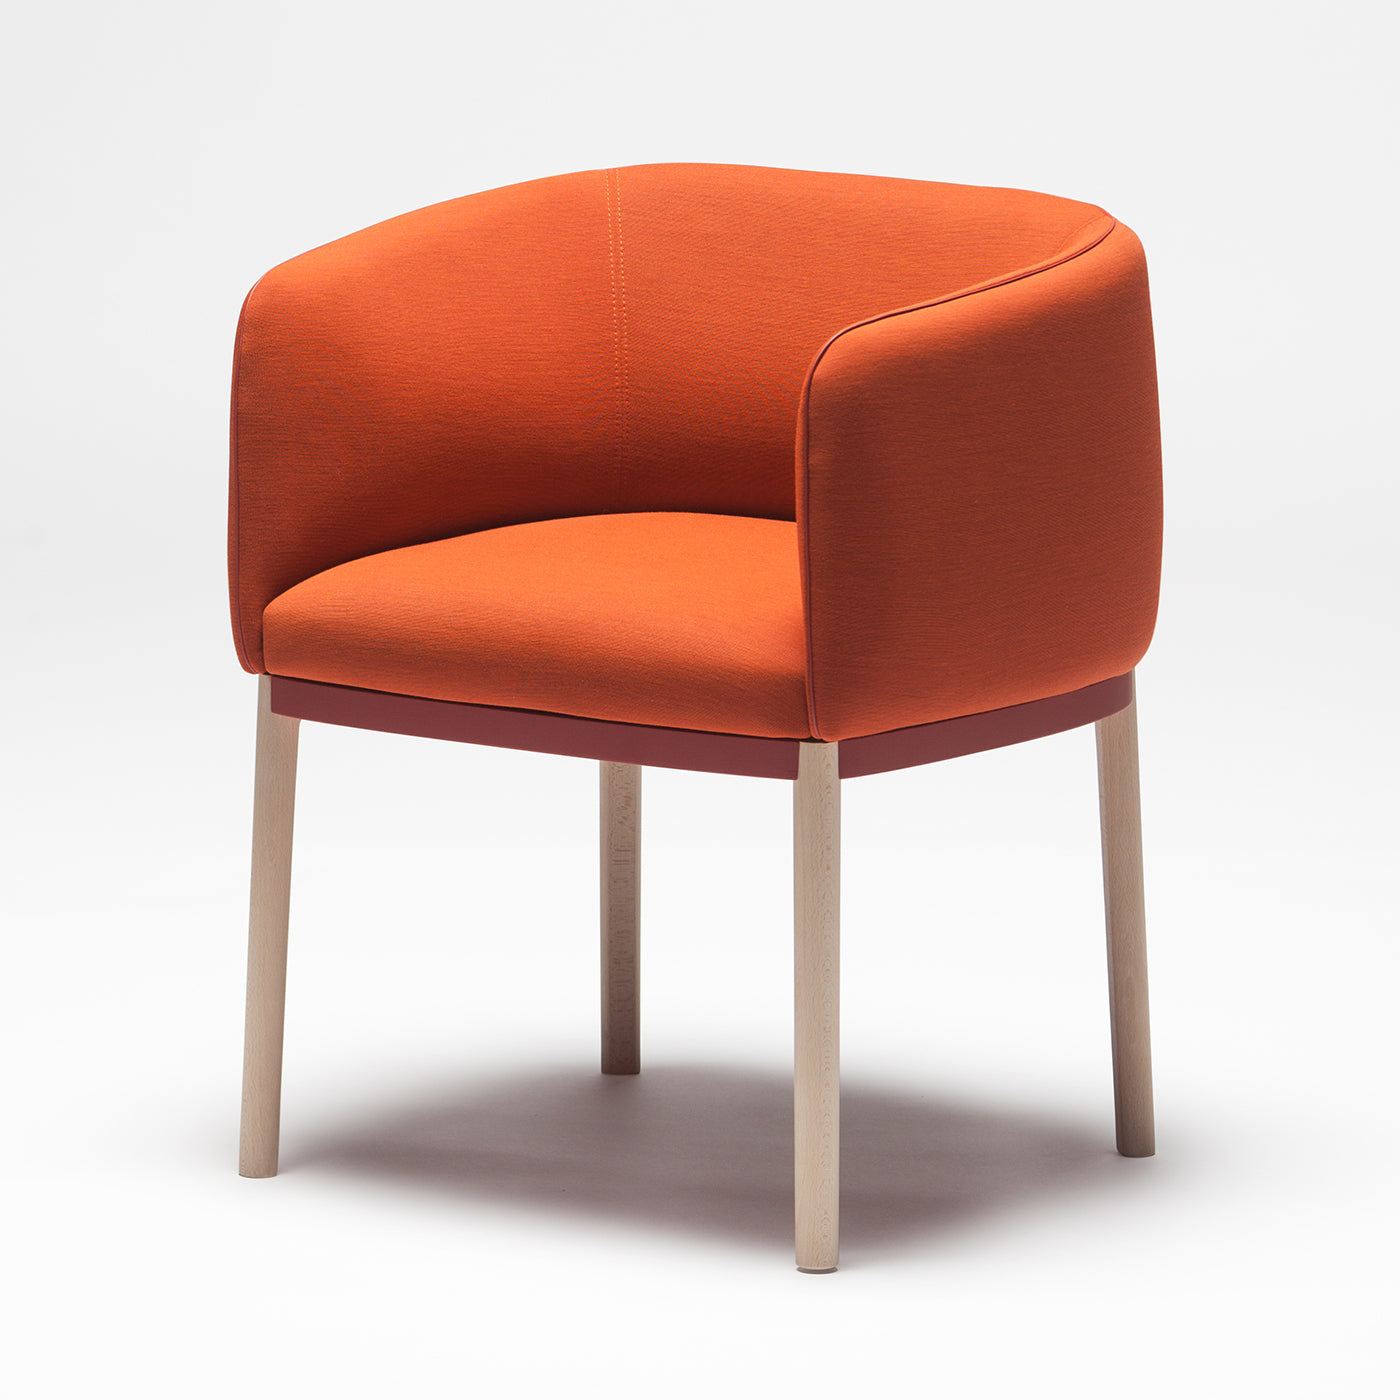 Cape 809 Orange Chair by Debiasi Sandri - Tekhne Collection - Alternative view 2